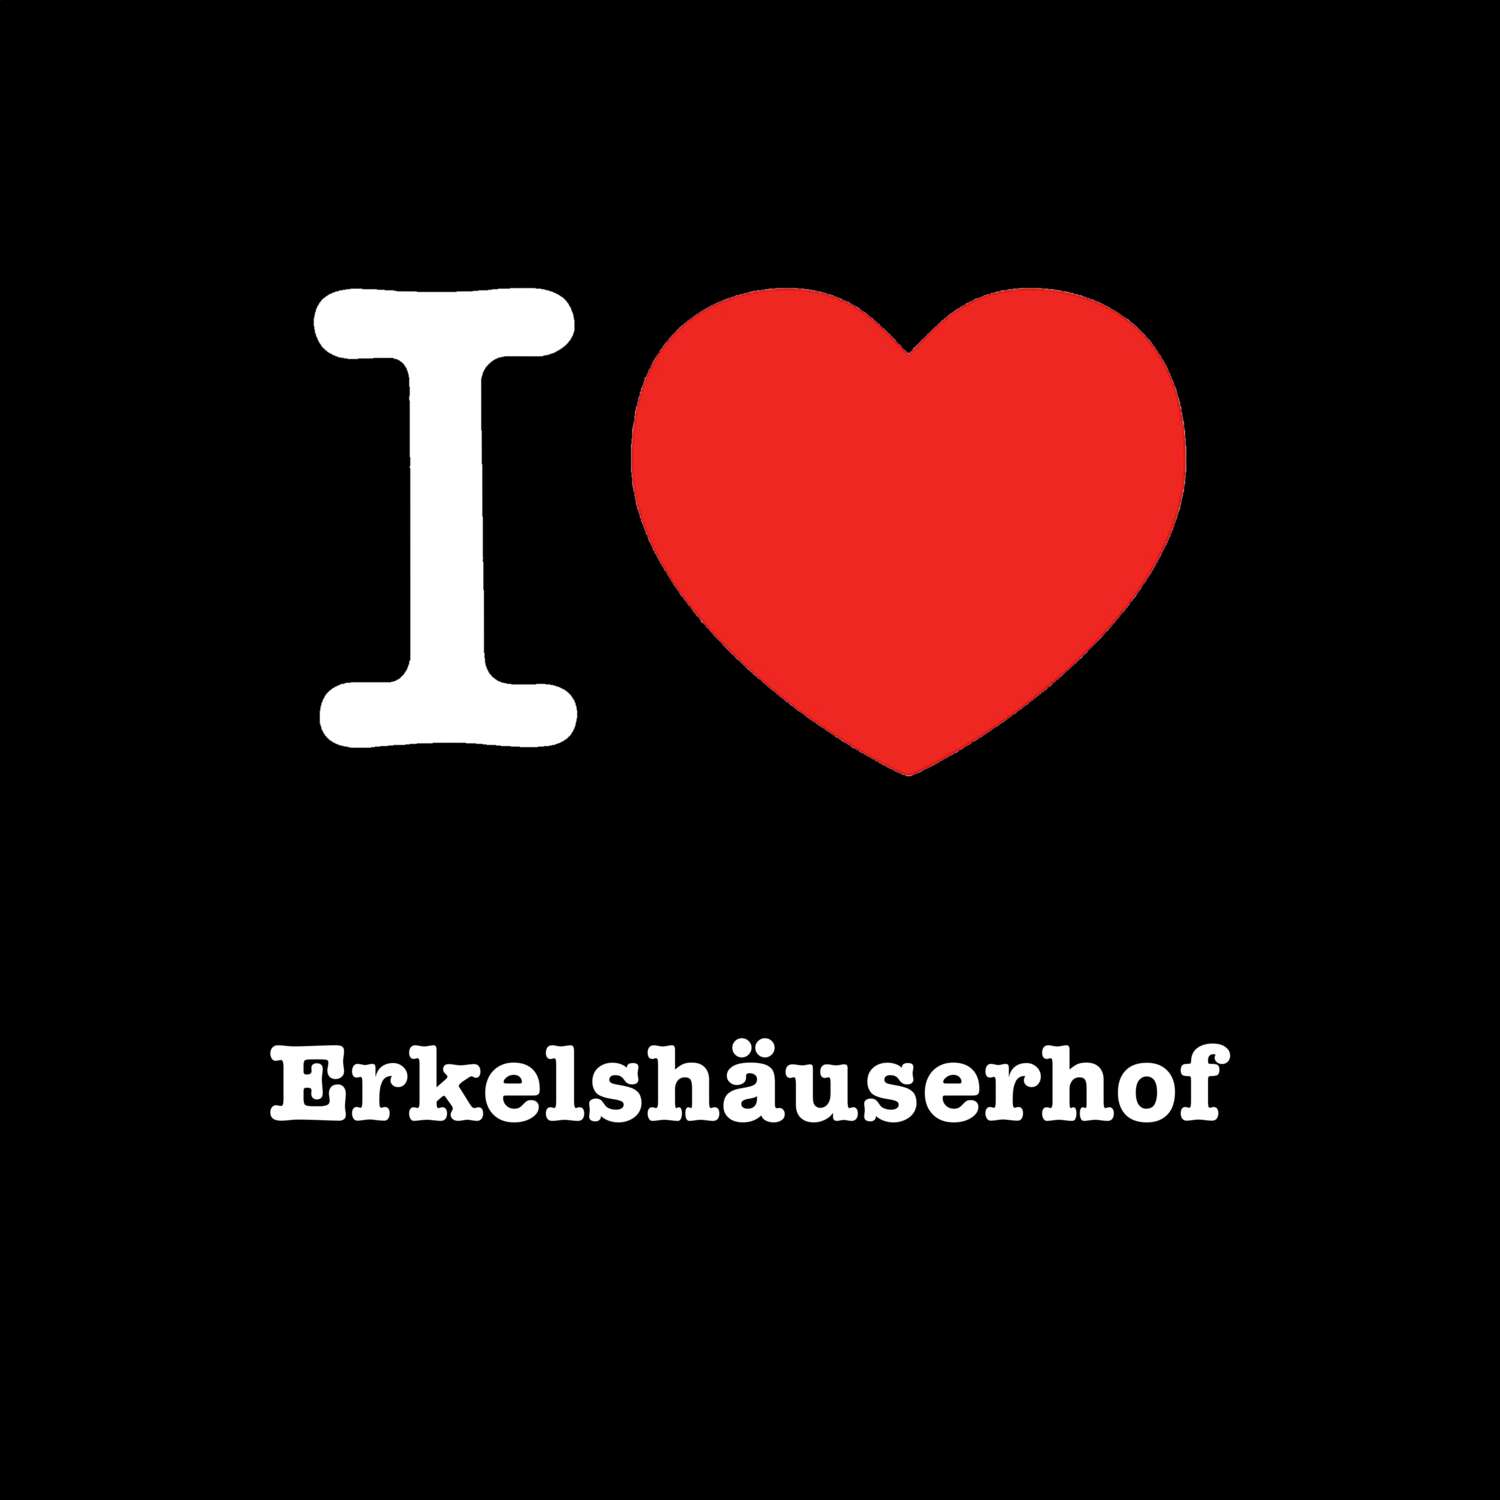 Erkelshäuserhof T-Shirt »I love«